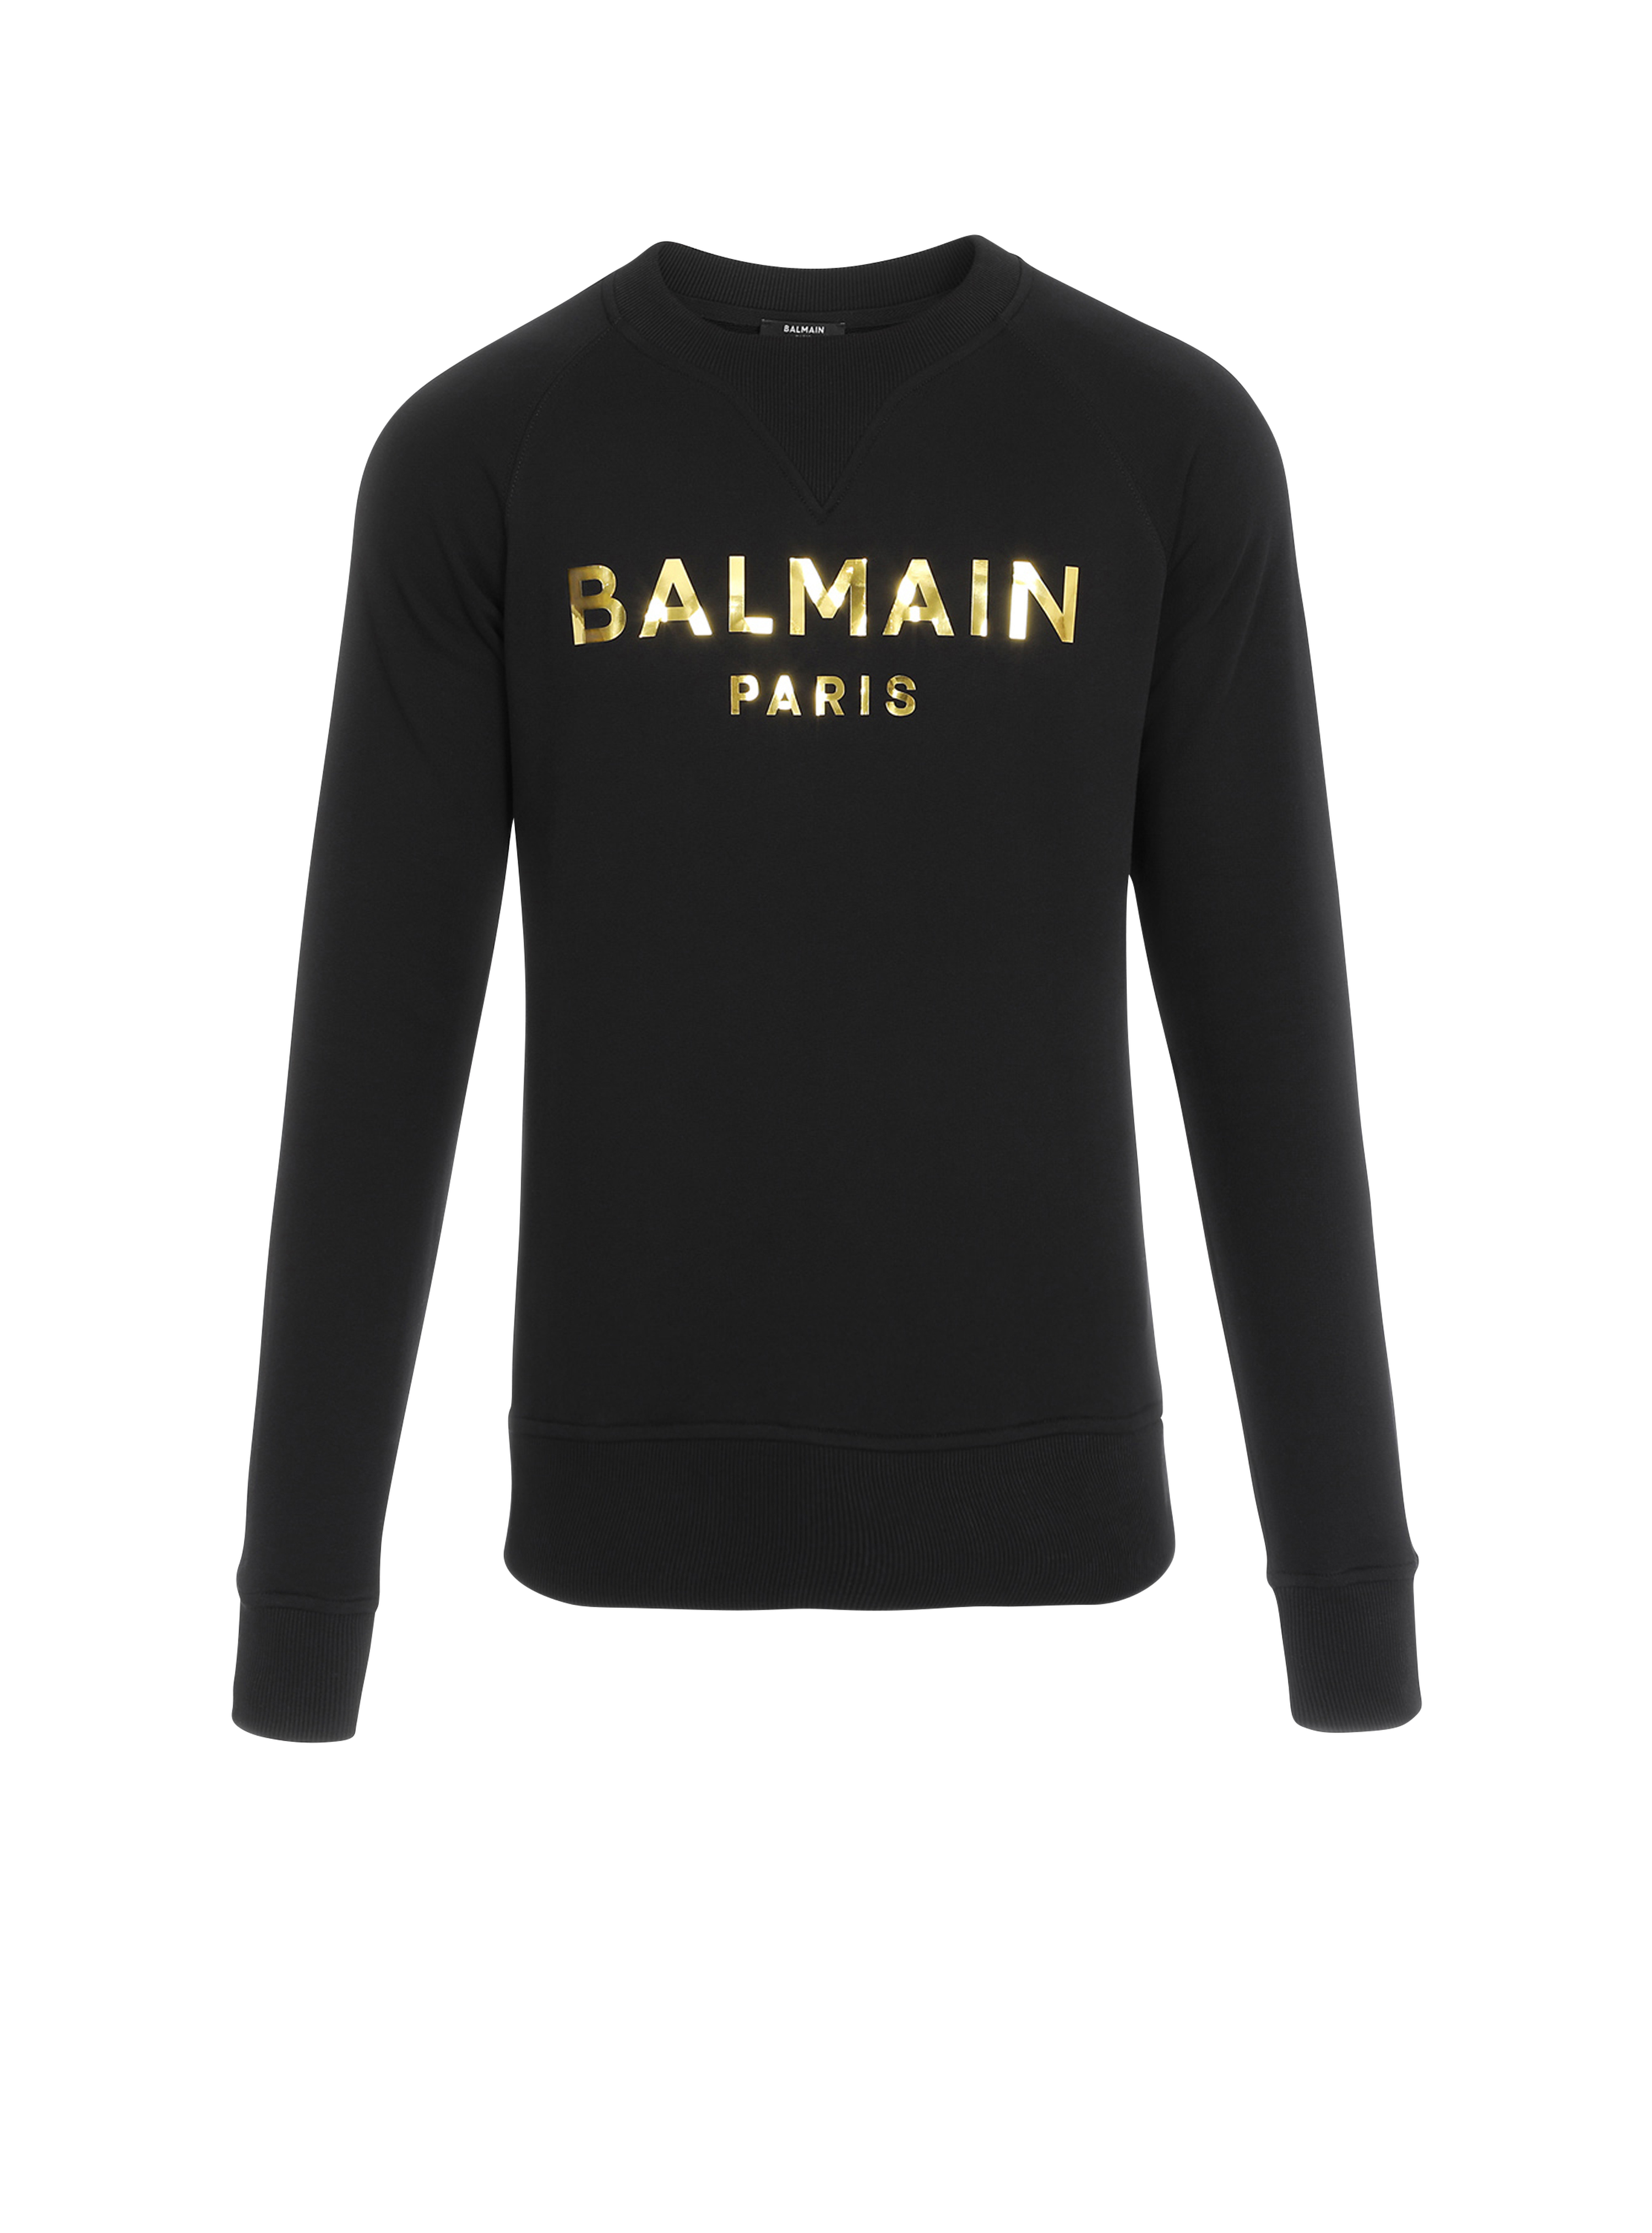 Eco-designed cotton sweatshirt with Balmain Paris logo print, gold